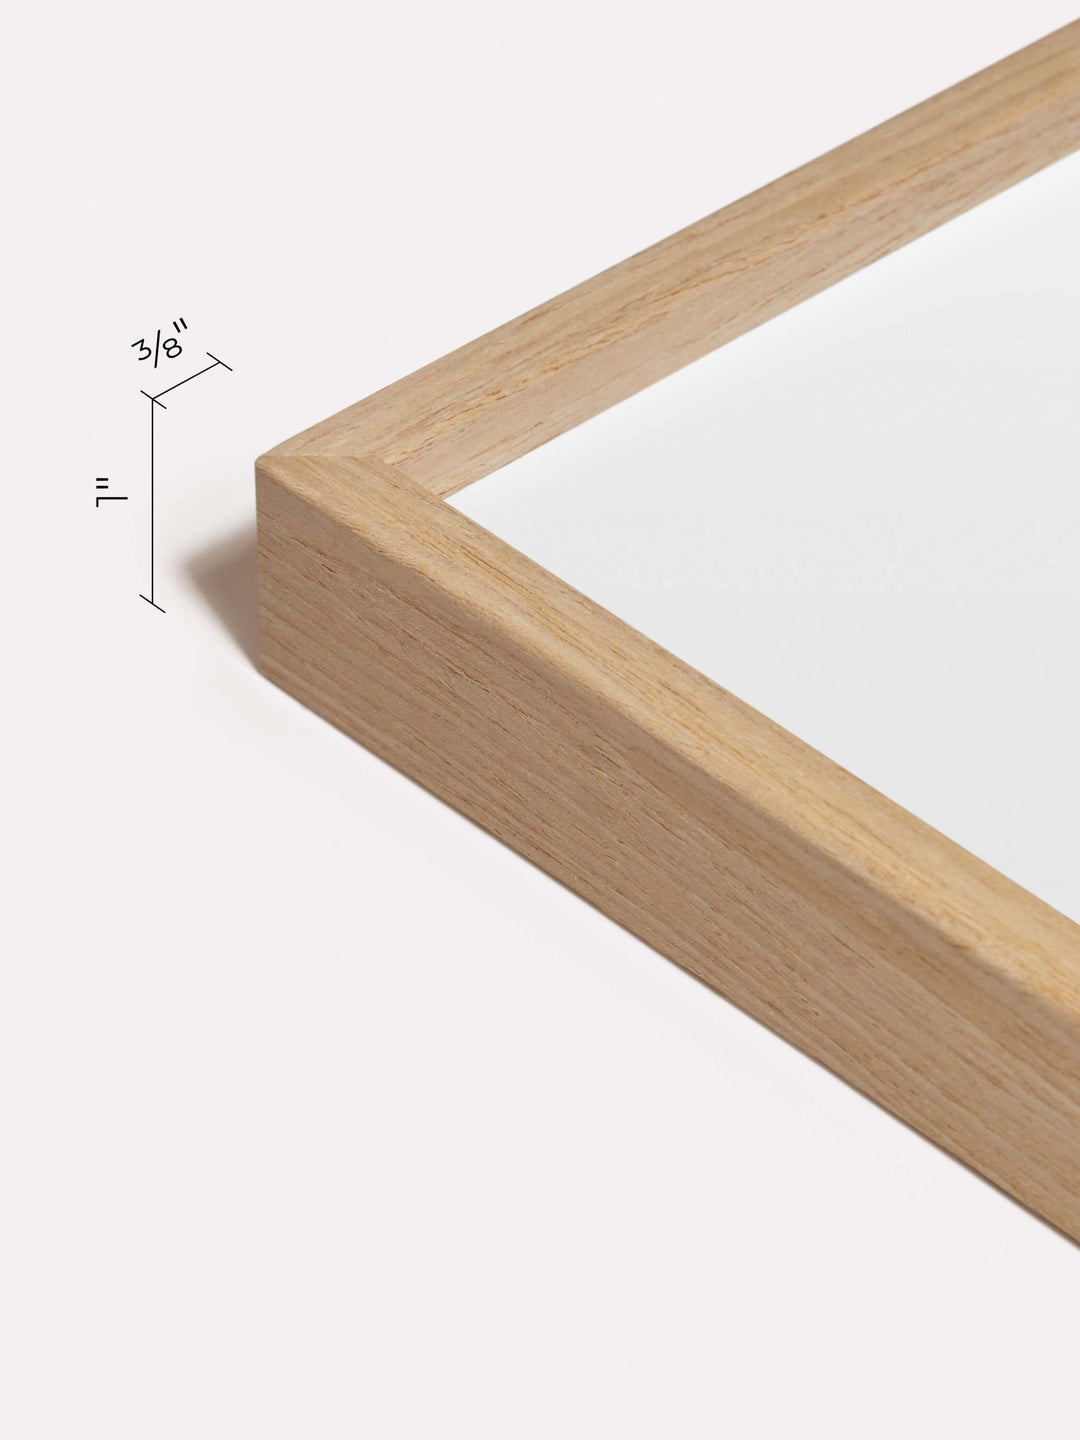 12x12-inch Thin Frame, Oak - Close-up view